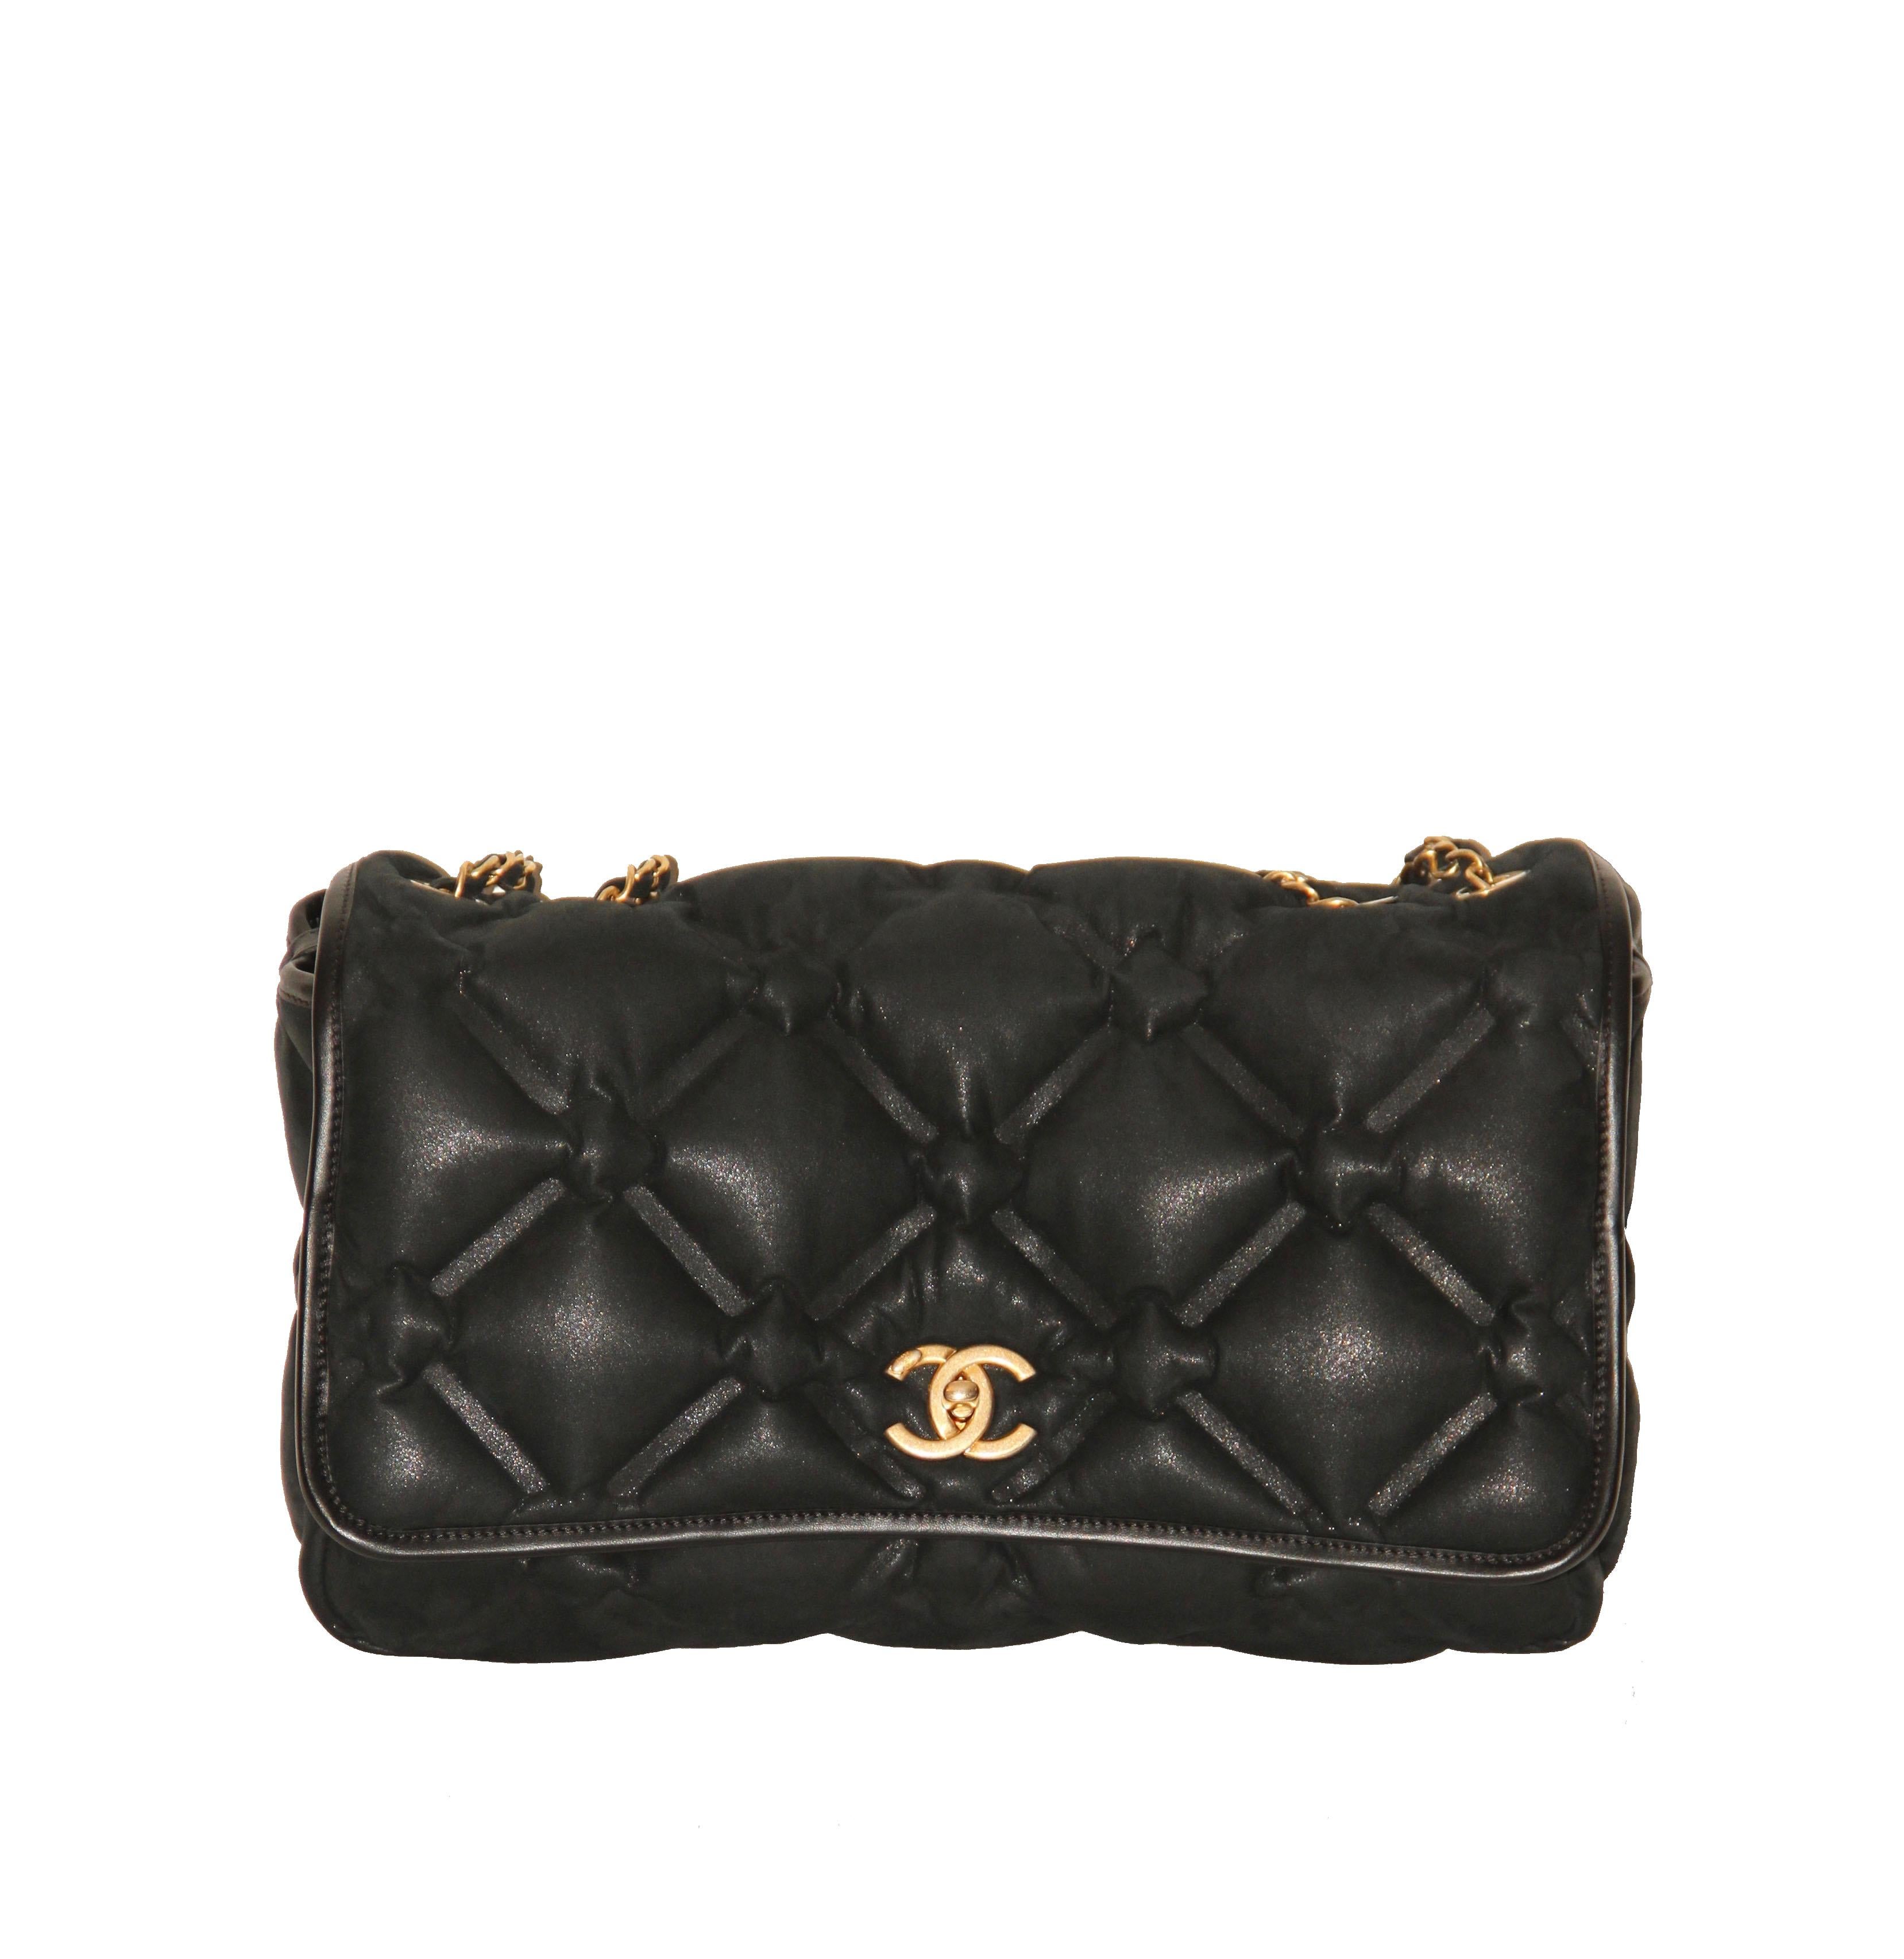 Chanel Black Iridescent Leather Jumbo Chesterfield Bag